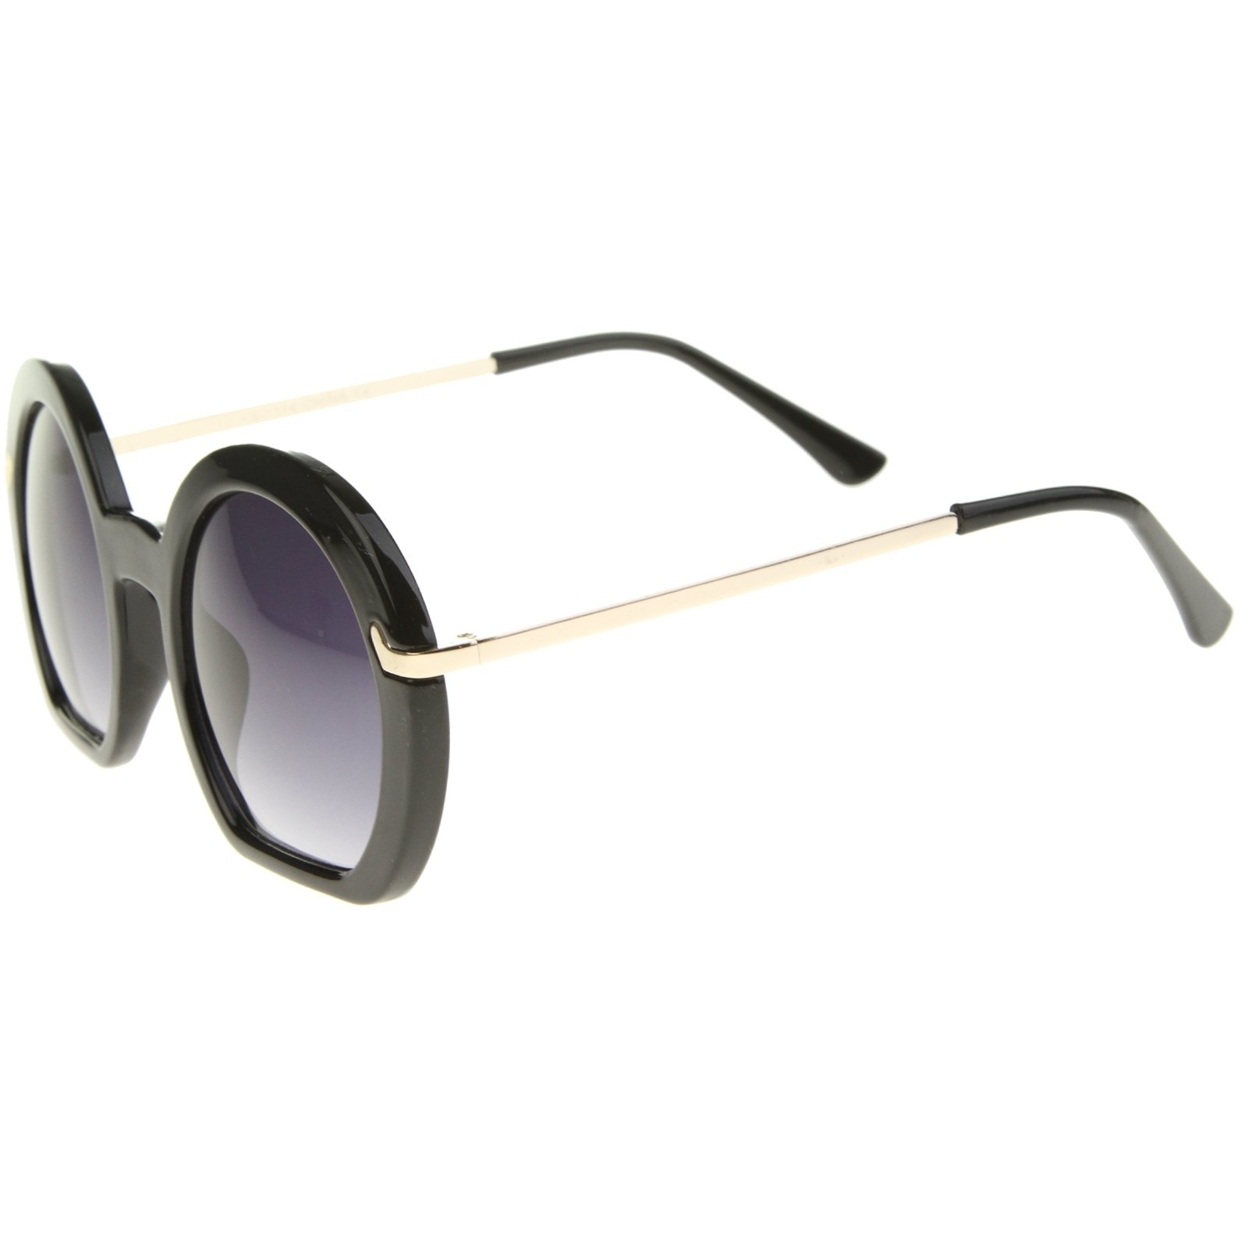 Women's High Fashion Flat Bottom Oversize Round Sunglasses 50mm - Black / Lavender